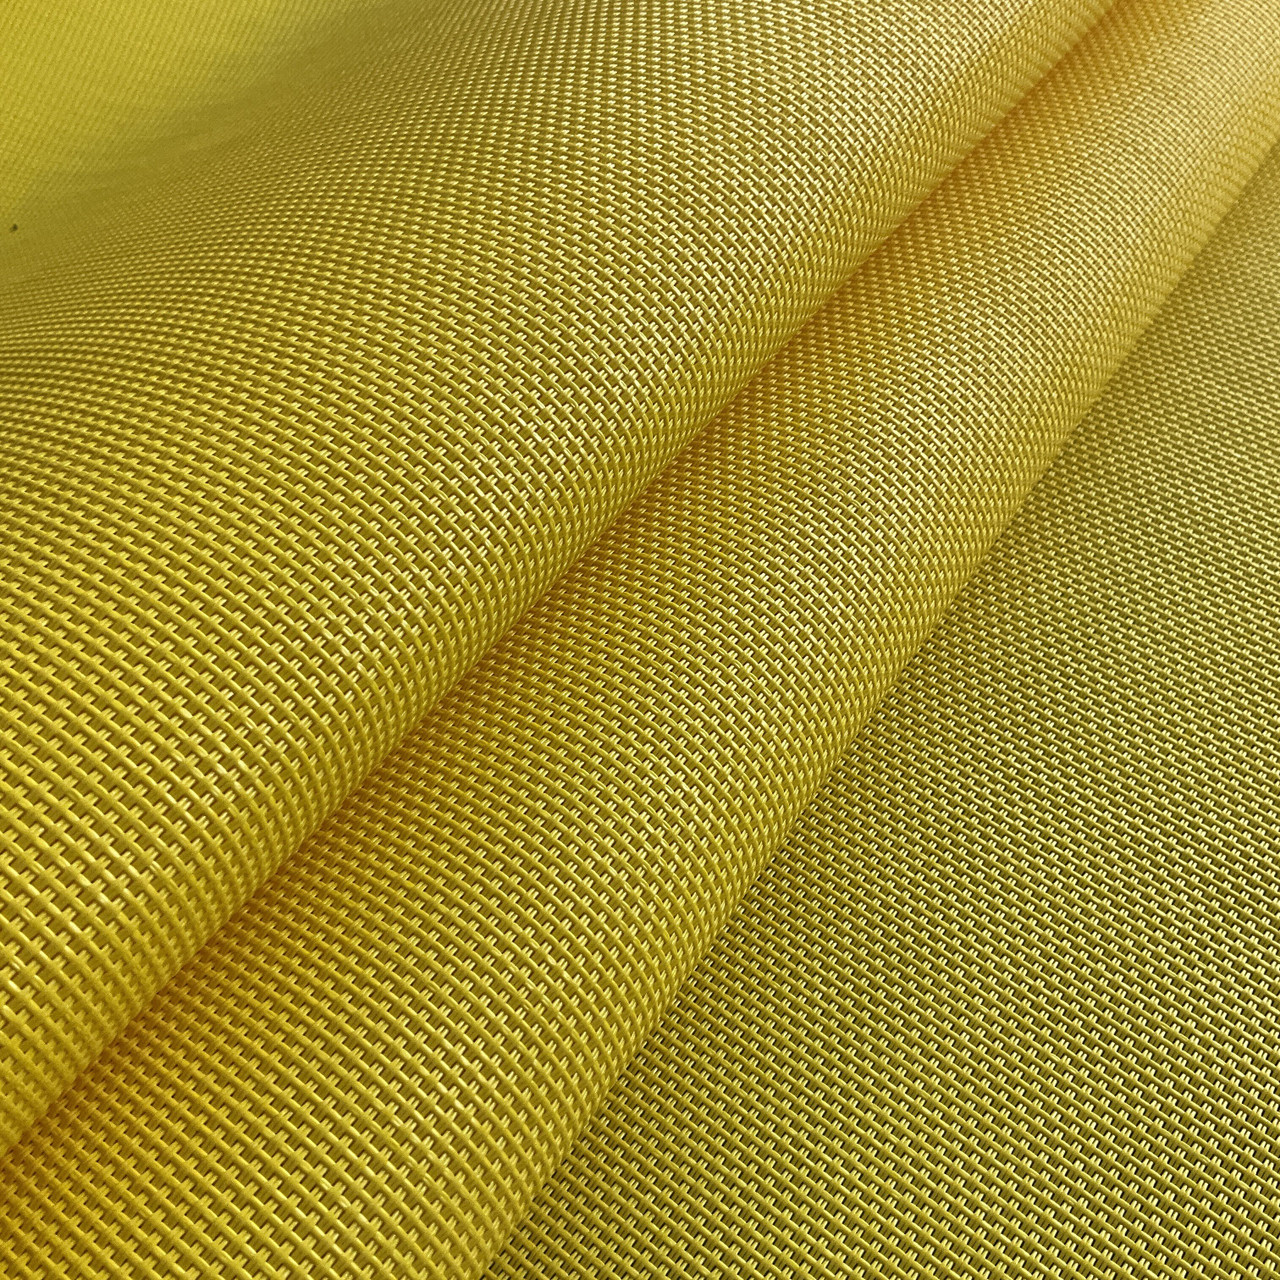 Auto Car Windshield Soft Perforated Yellow Wash Sponge Pad